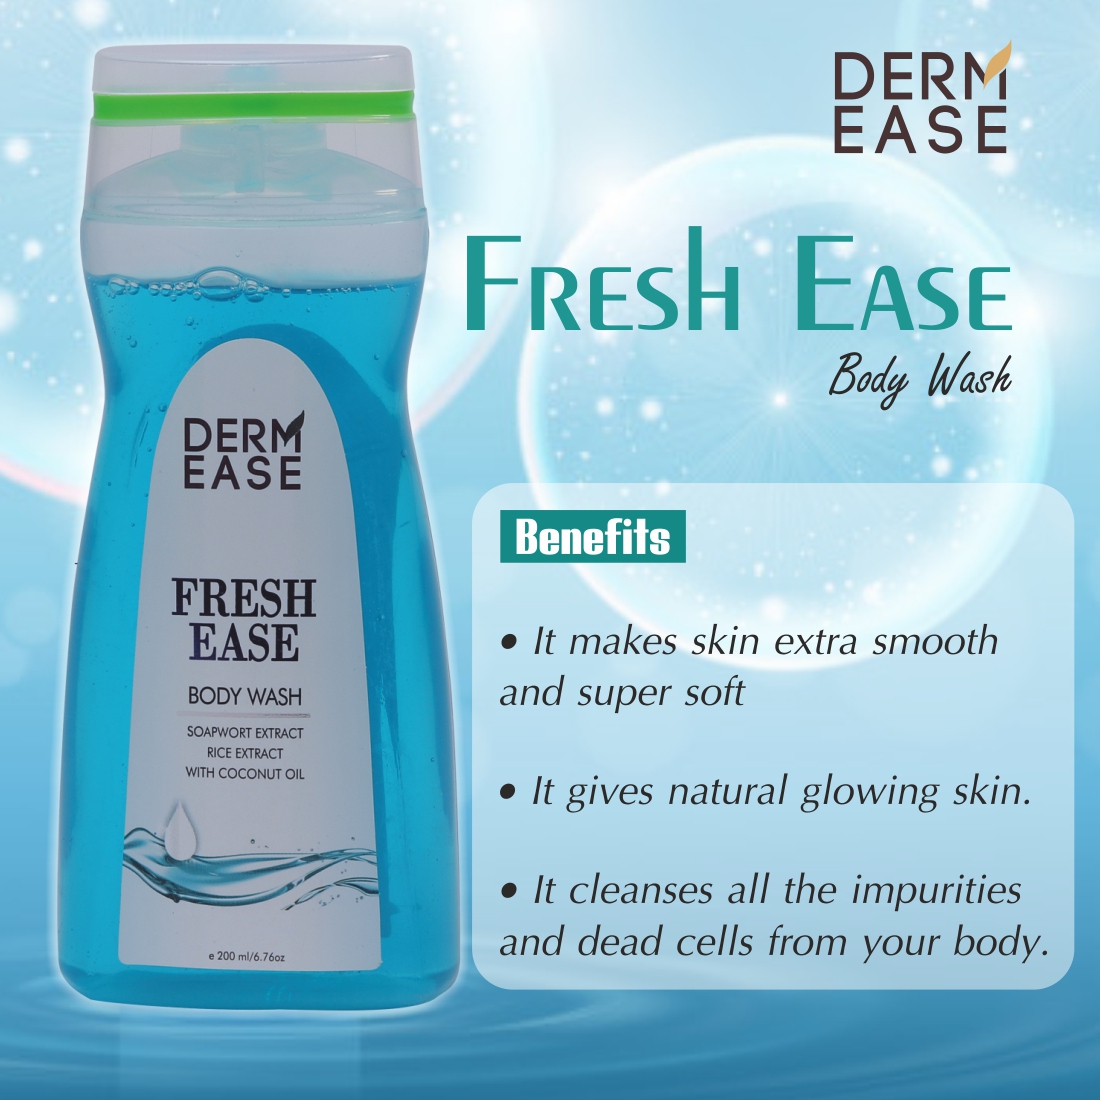 DERM EASE Fresh Ease Body Wash